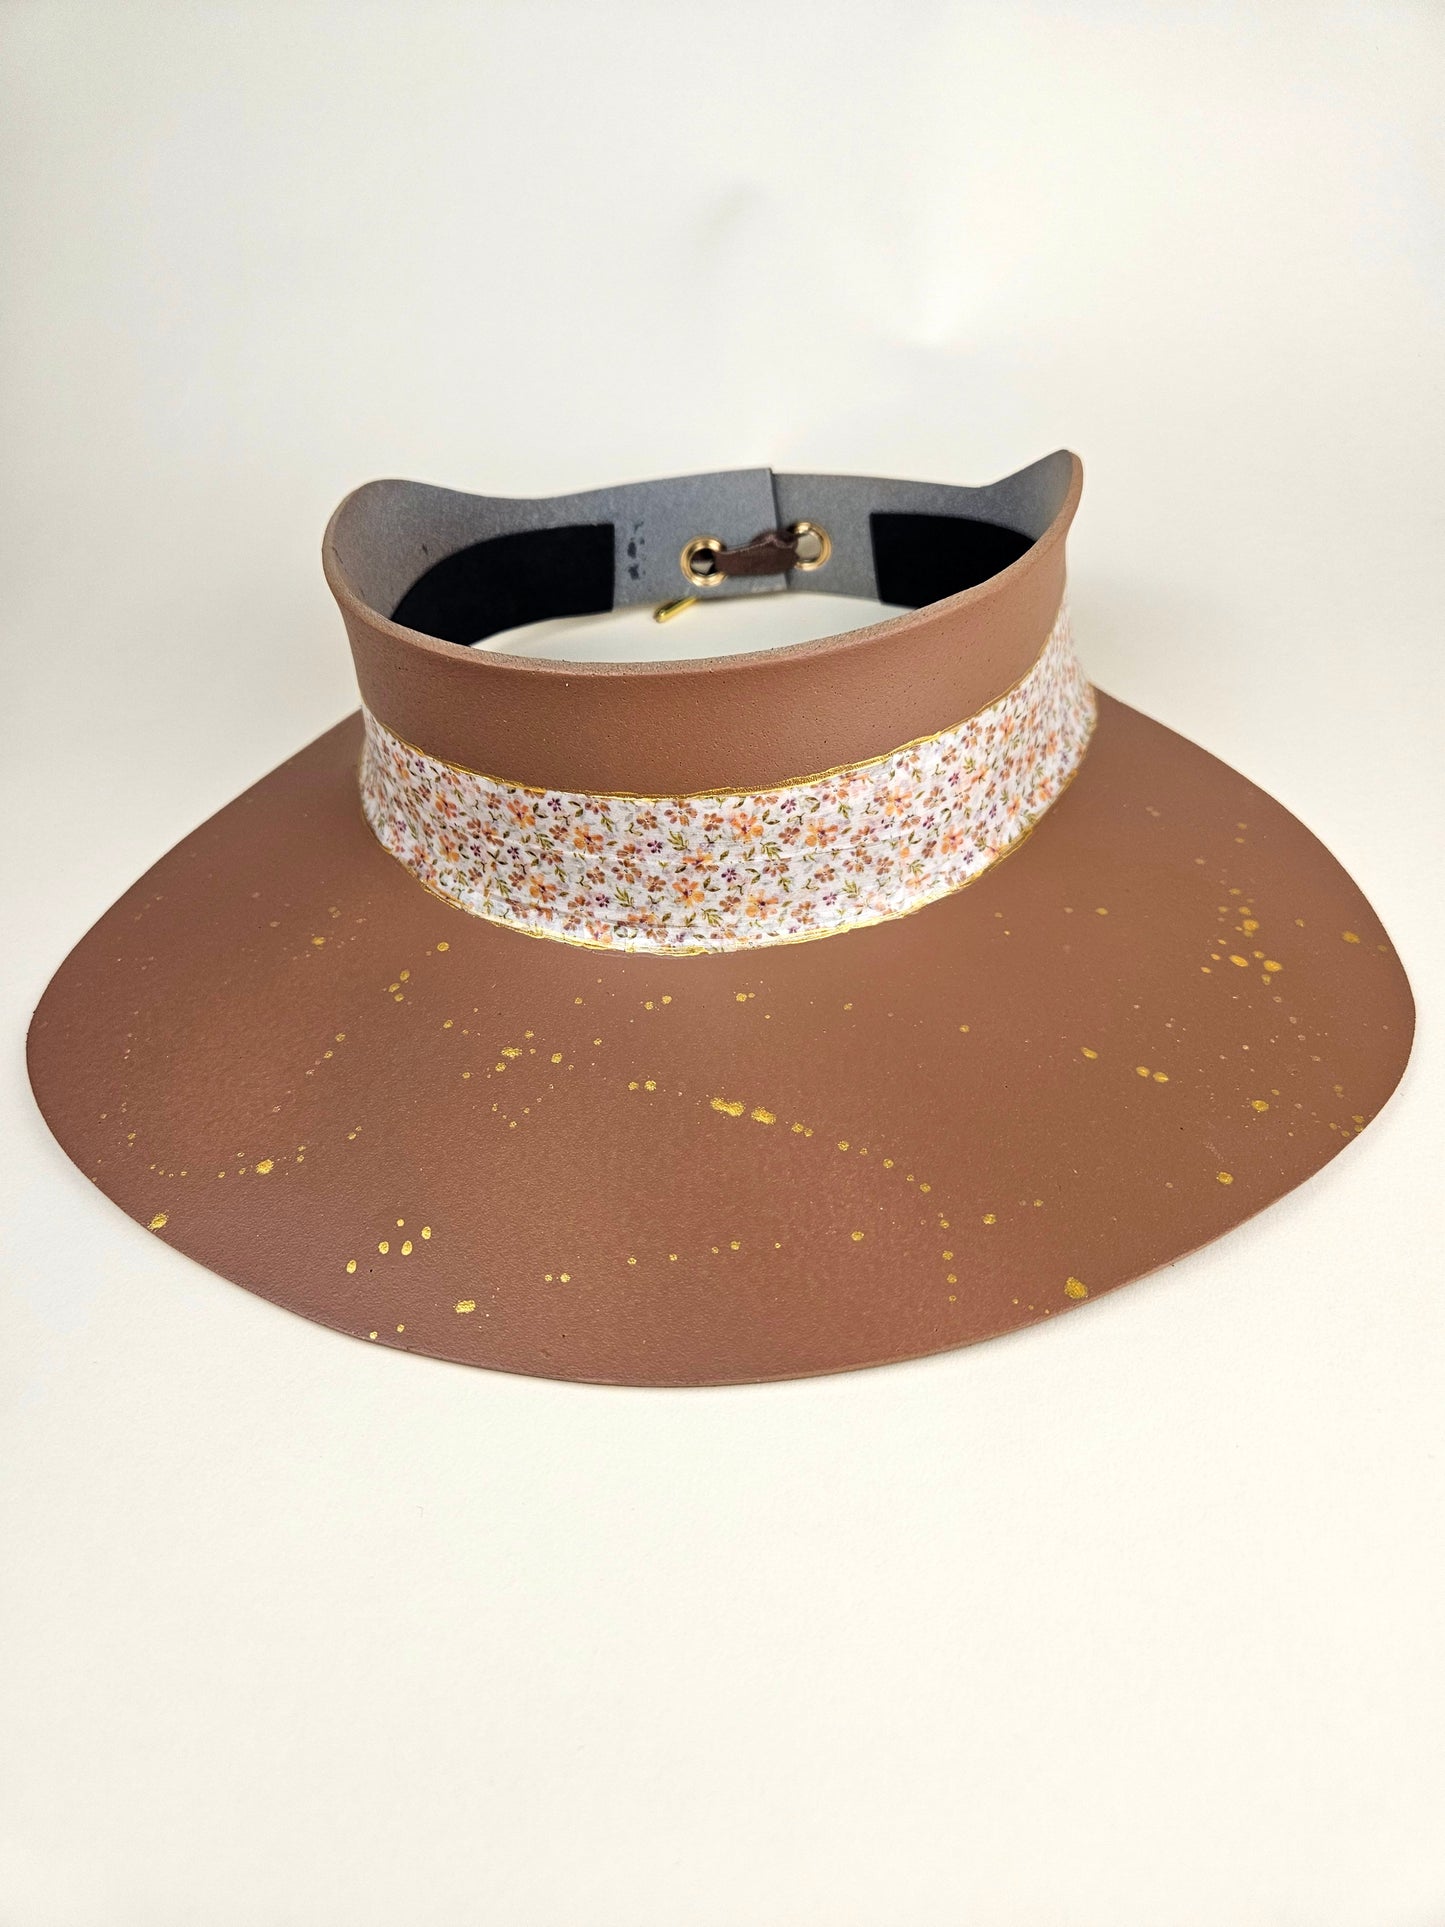 Caramel Brown Audrey Sun Visor Hat with Fancy Orange Floral Band and Gold Paint Splatter Effect: UV Resistant, Walks, 1950s, Brunch, Tea, Golf, Wedding, Church, No Headache, Easter, Pool, Beach, Big Brim